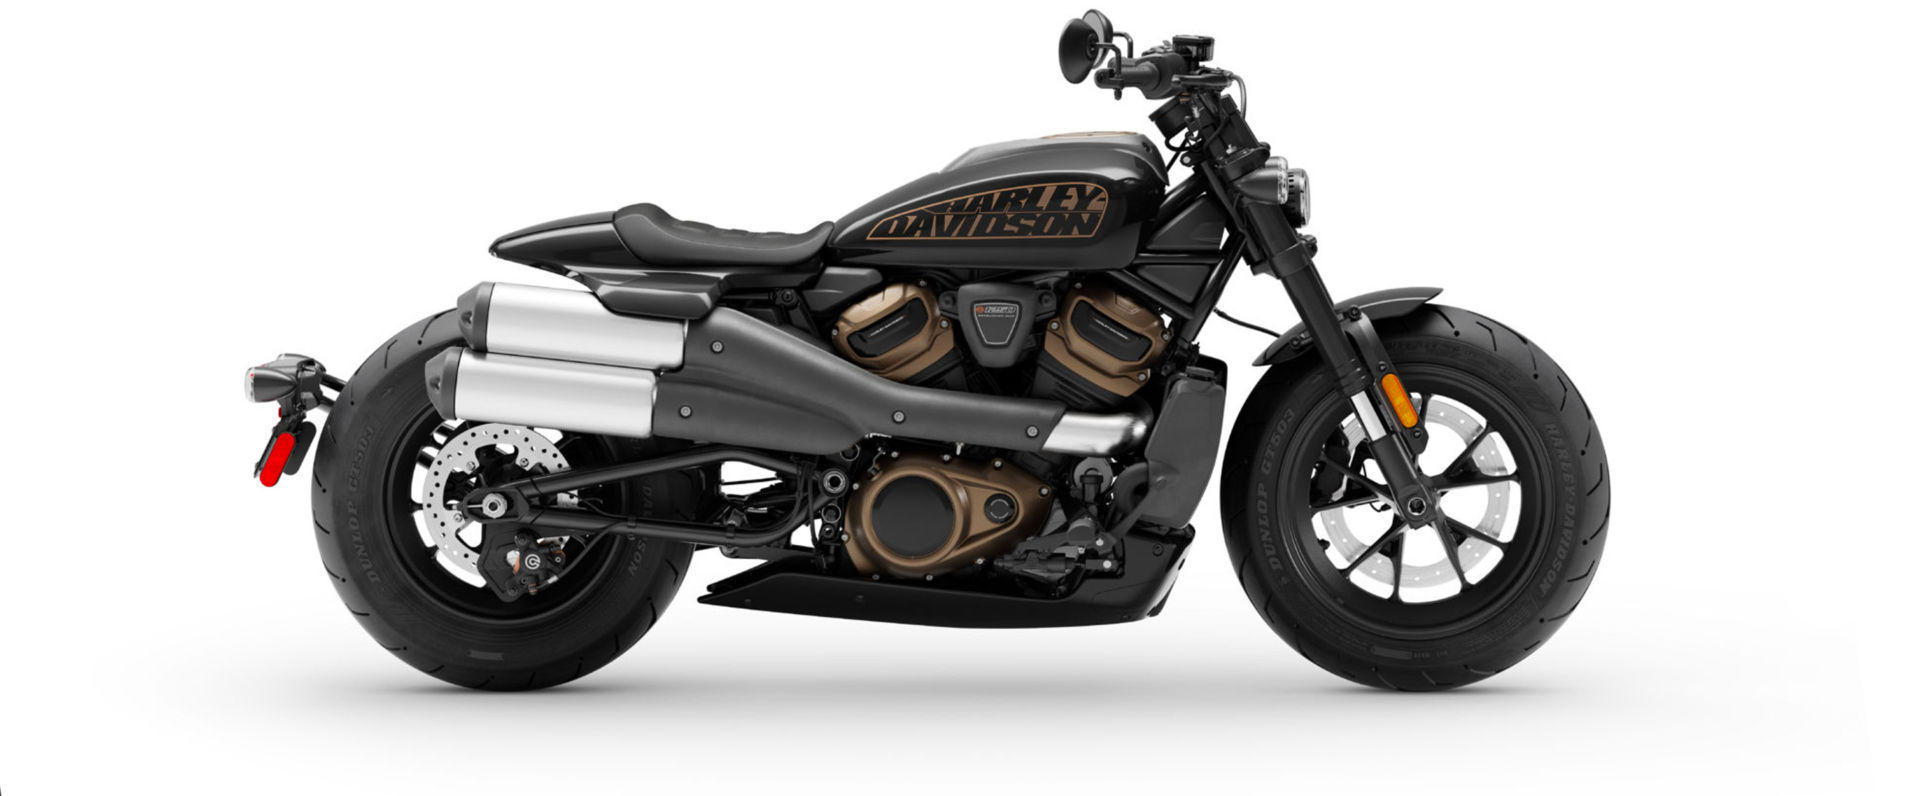 New Harley-Davidson Sportster S features Revolution Max 1250 V